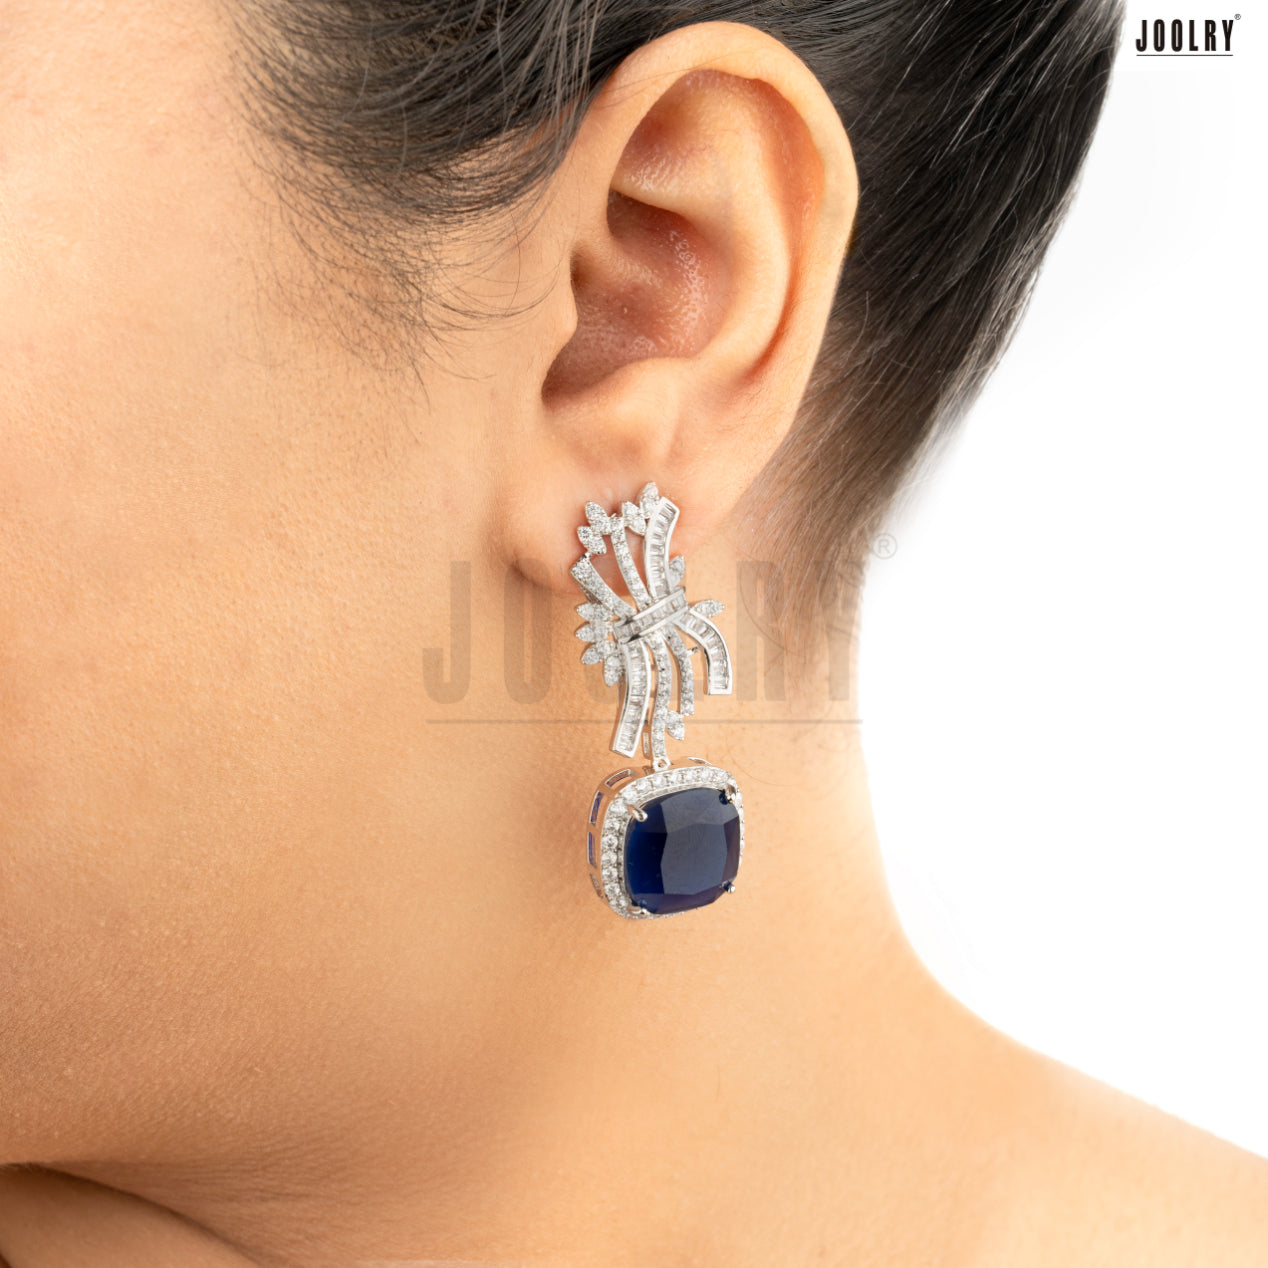 Azure diamond necklace set